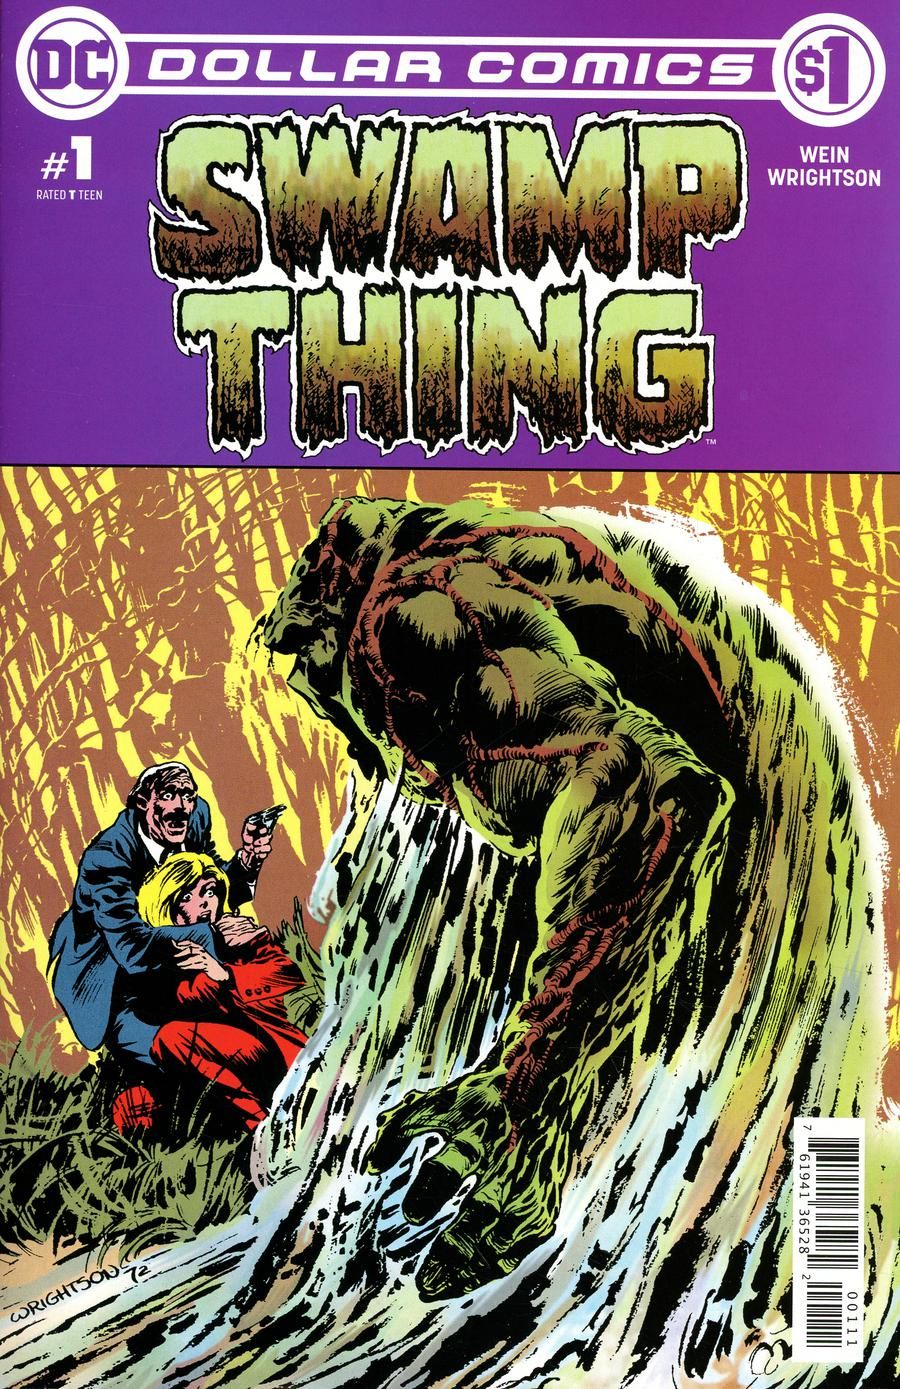 Dollar Comics: Swamp Thing Comic